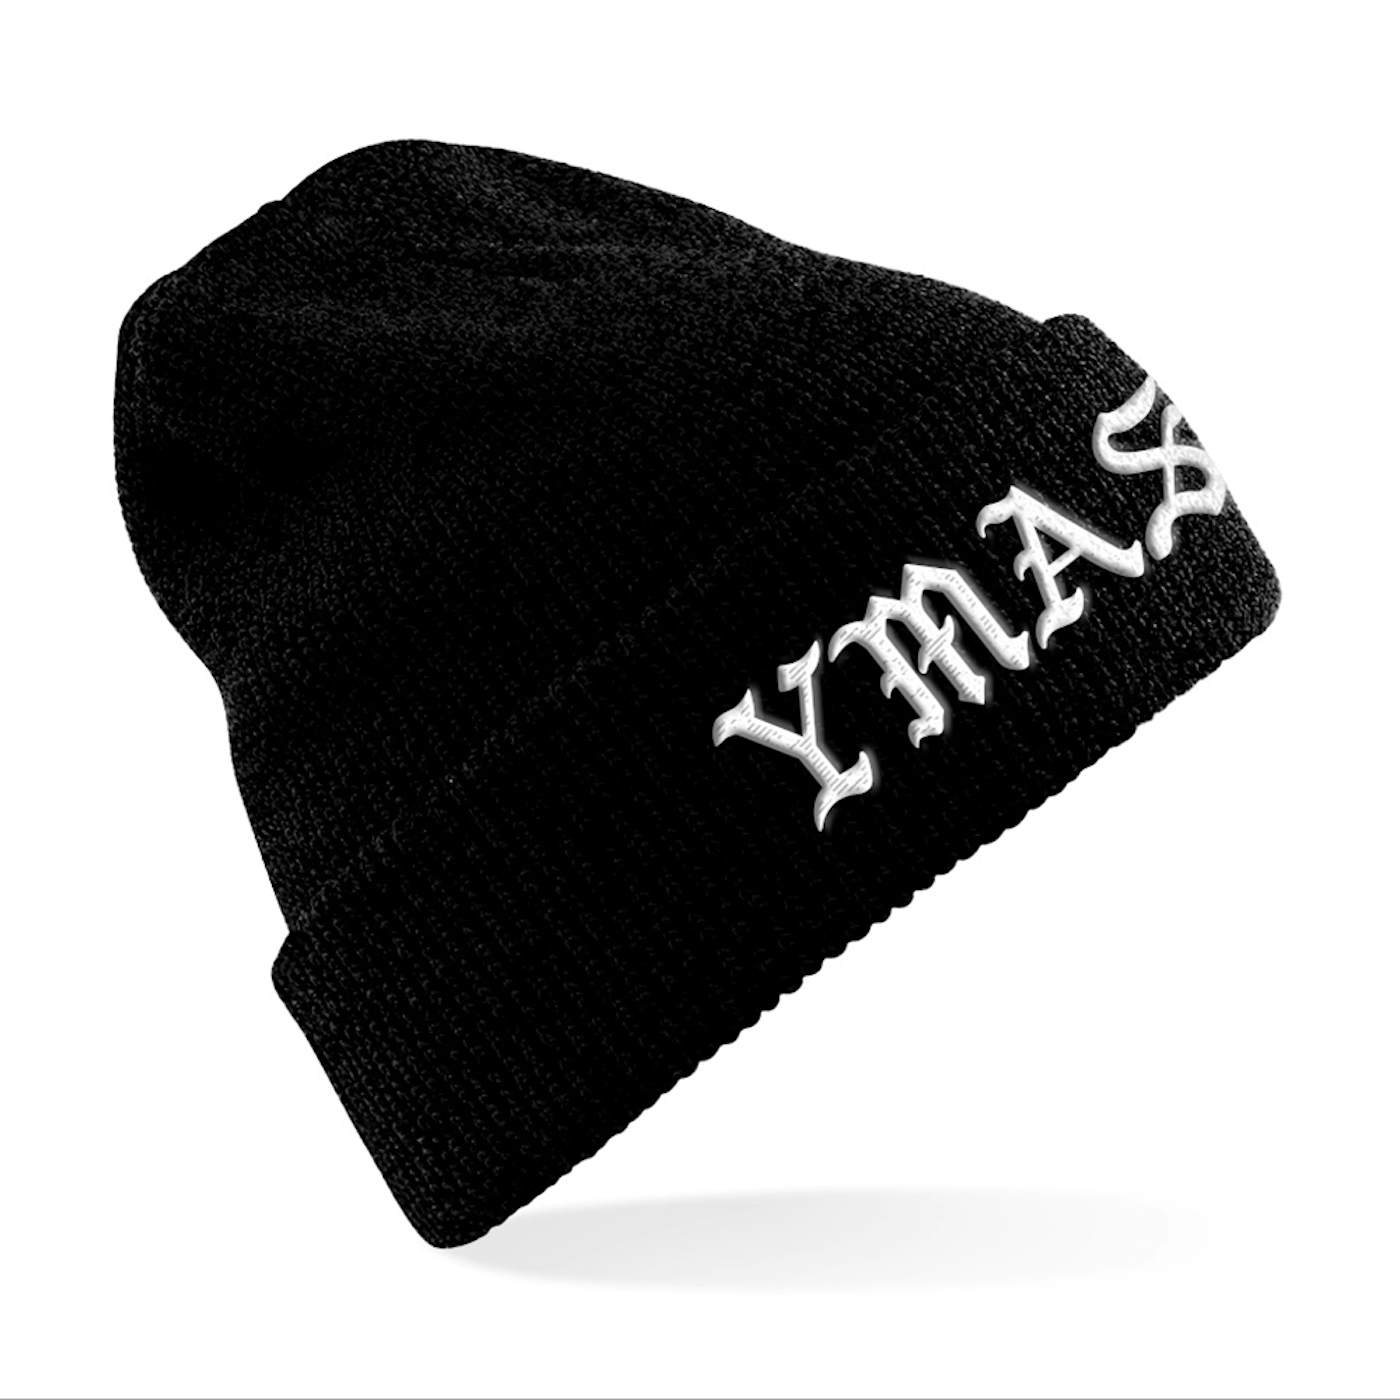 You Me At Six YMAS Logo Black Beanie